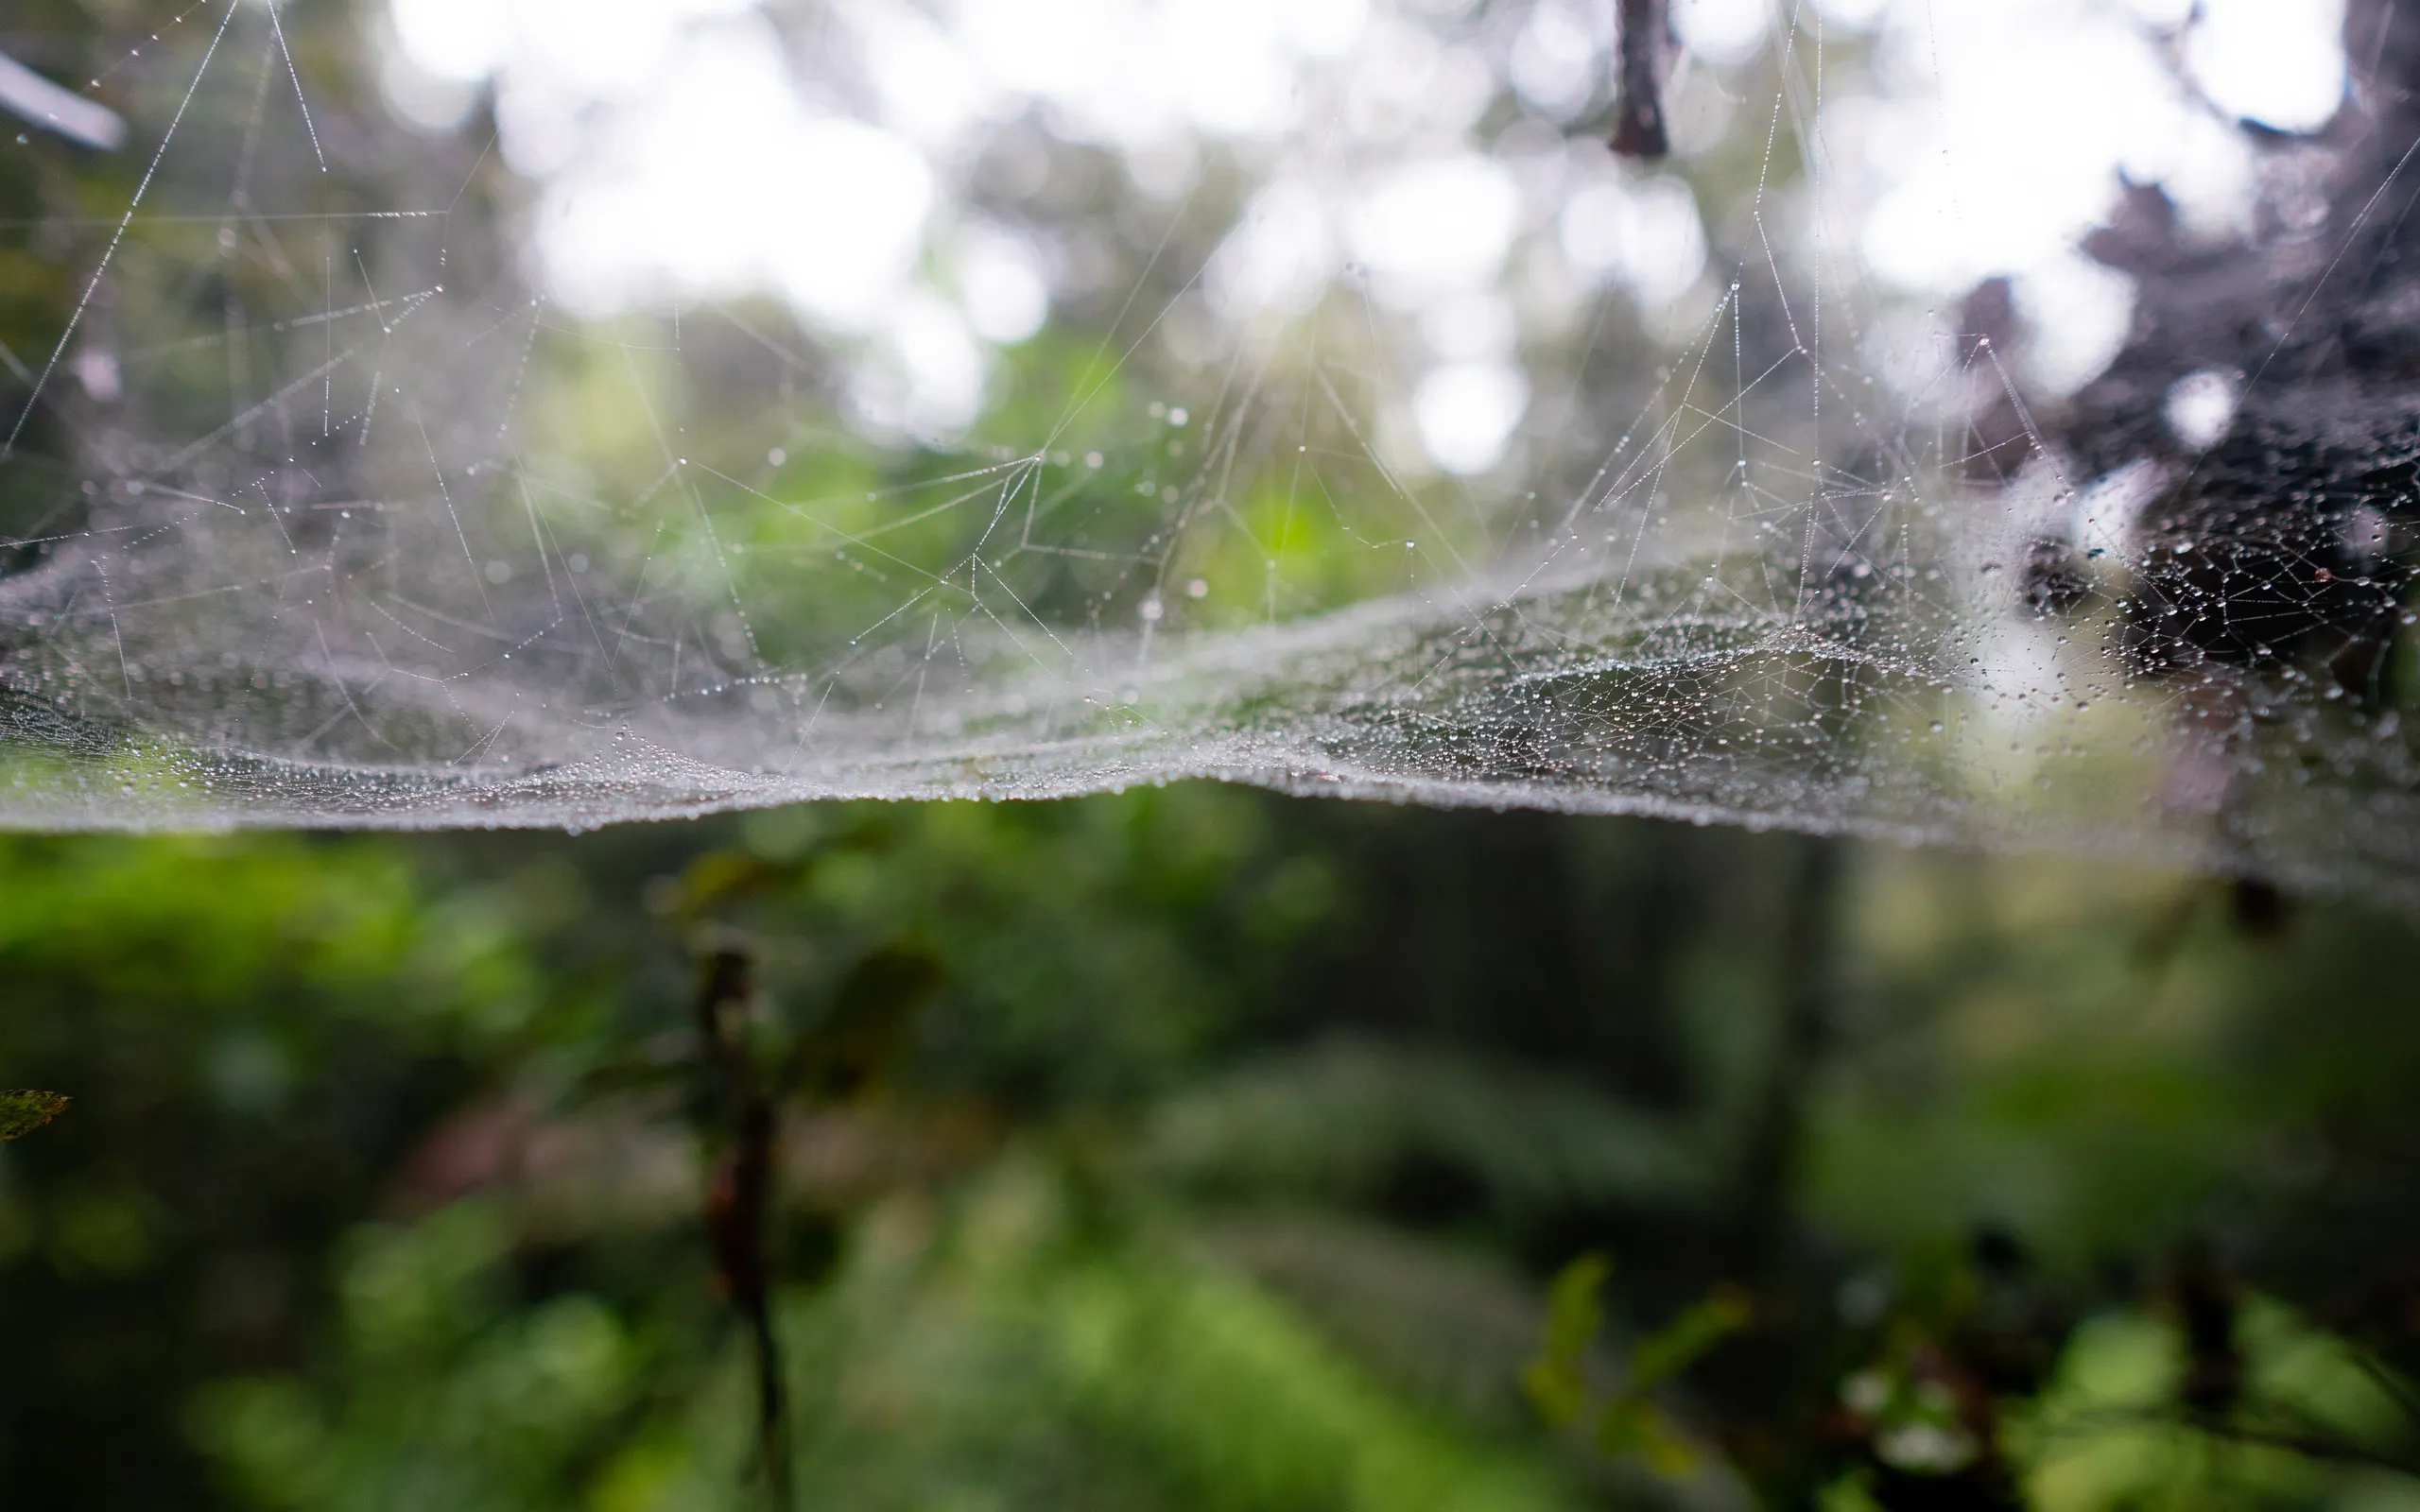 Spiderweb alongside the track